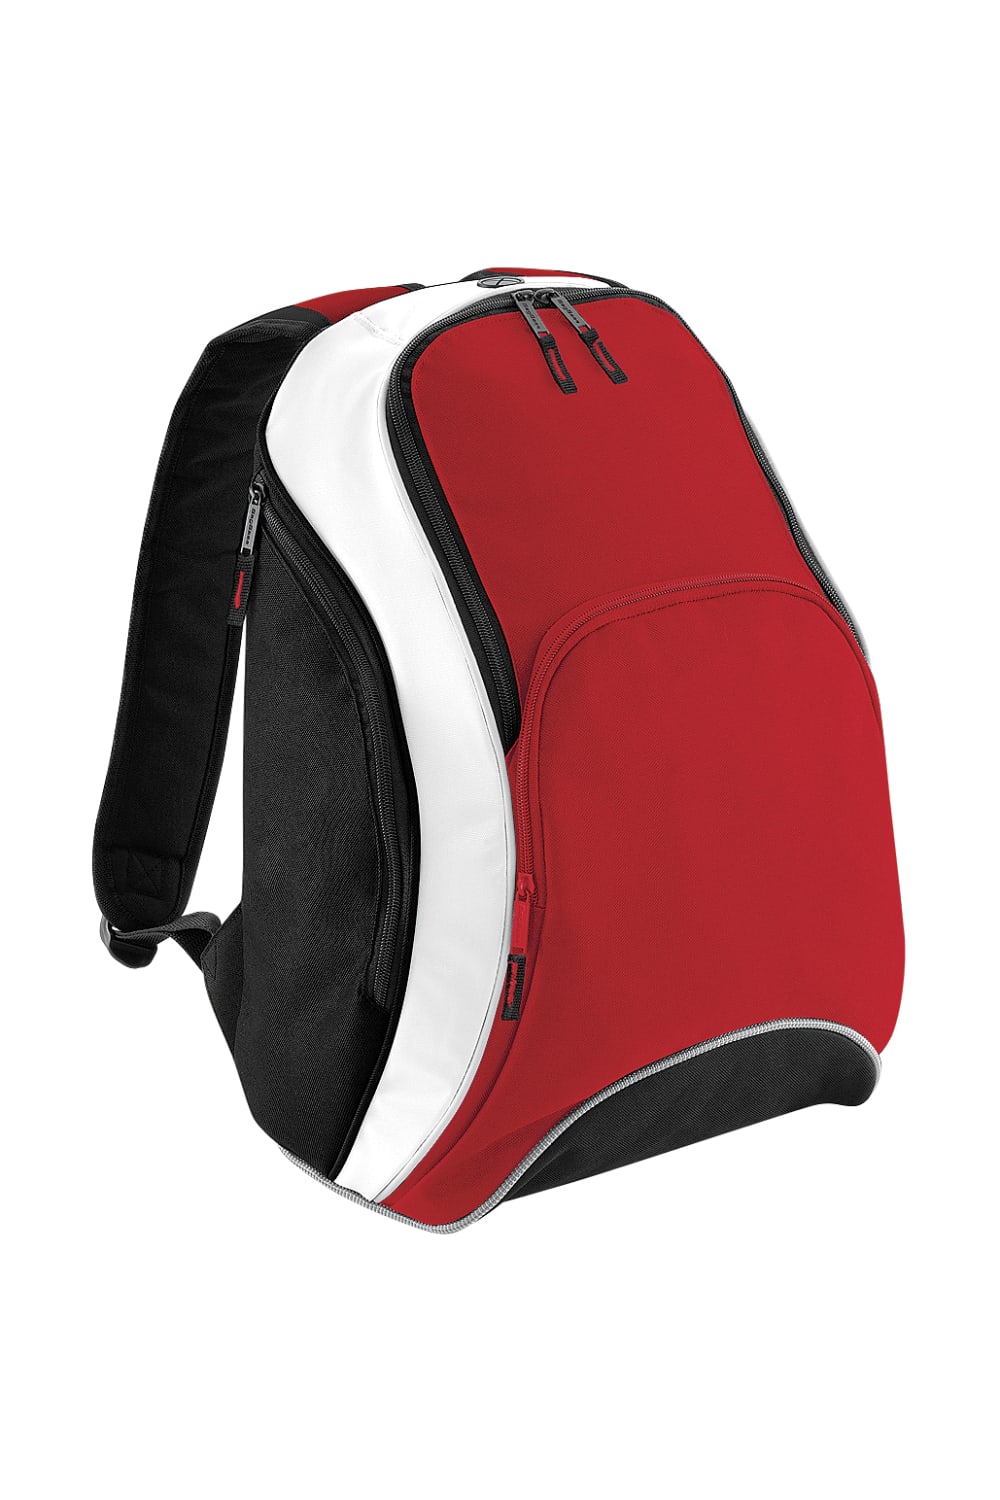 Bagbase Teamwear Backpack / Rucksack (21 Liters) (Pack of 2) (Classic Red/Black/White) (One Size)